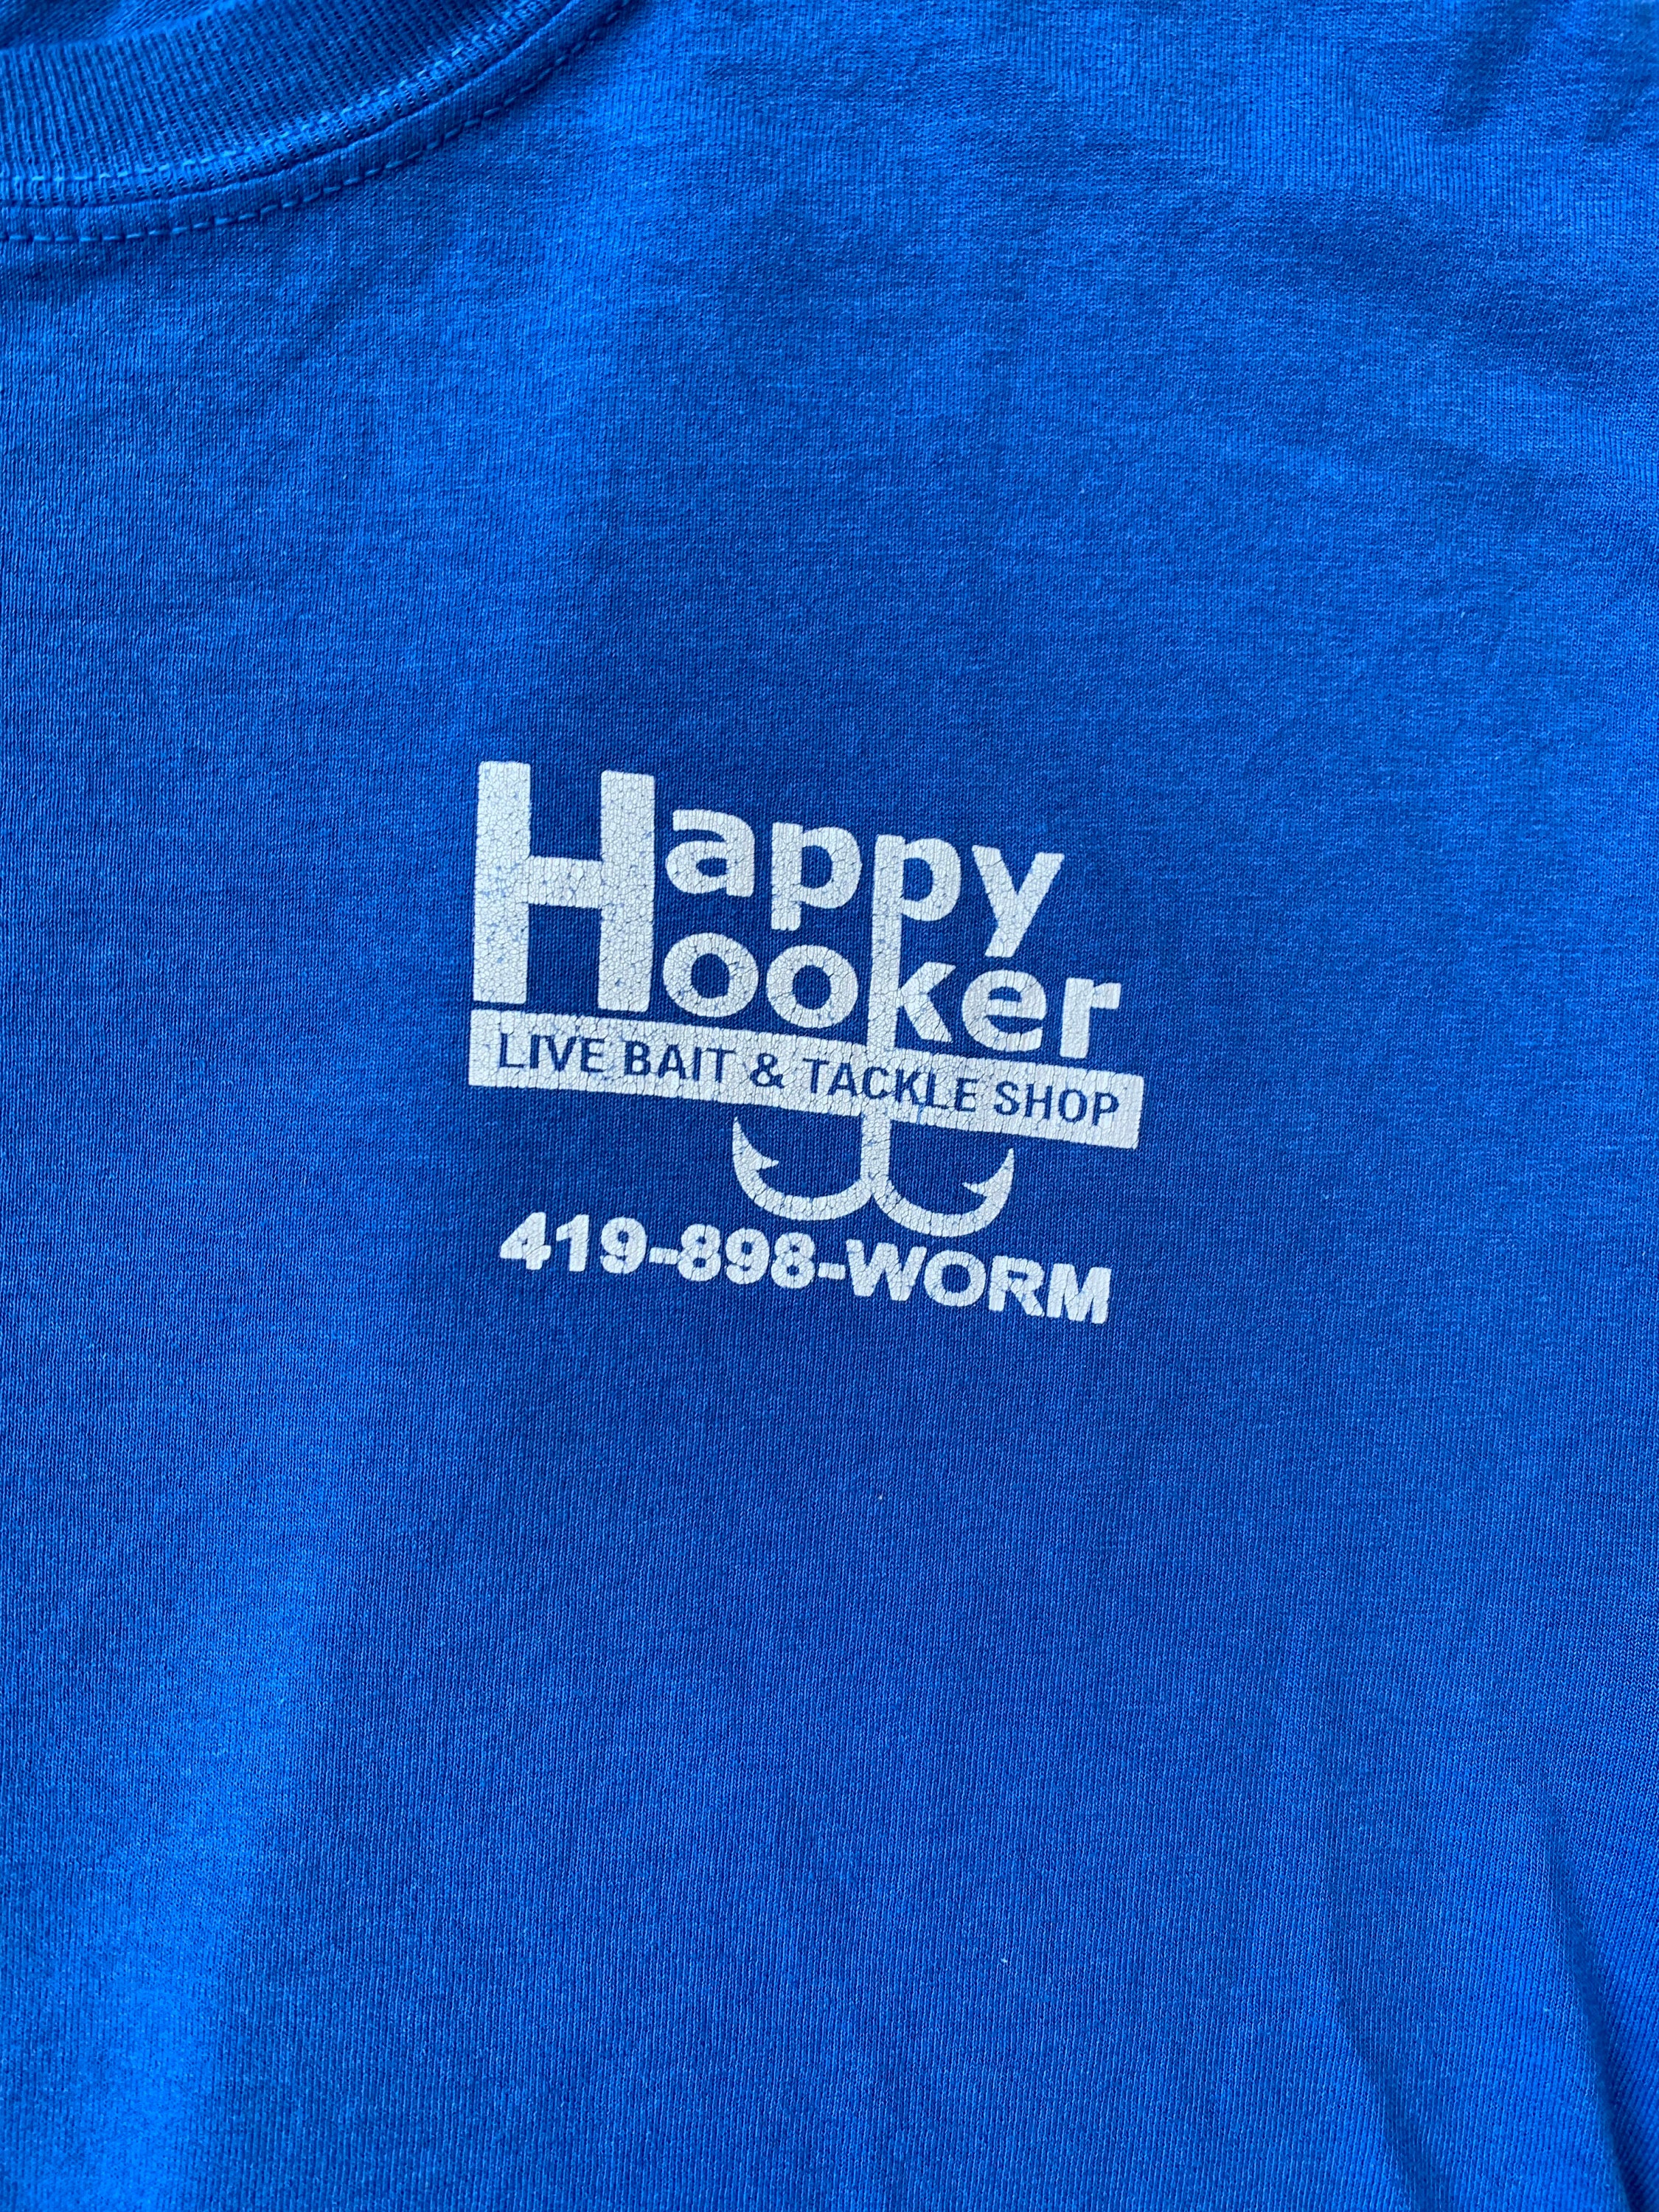 Happy Hooker Live Bait & Tackle Shop / Vintage Advertising T Shirt / Lake  Erie Ohio T Shirt / Vintage Fishing T Shirt -  Canada